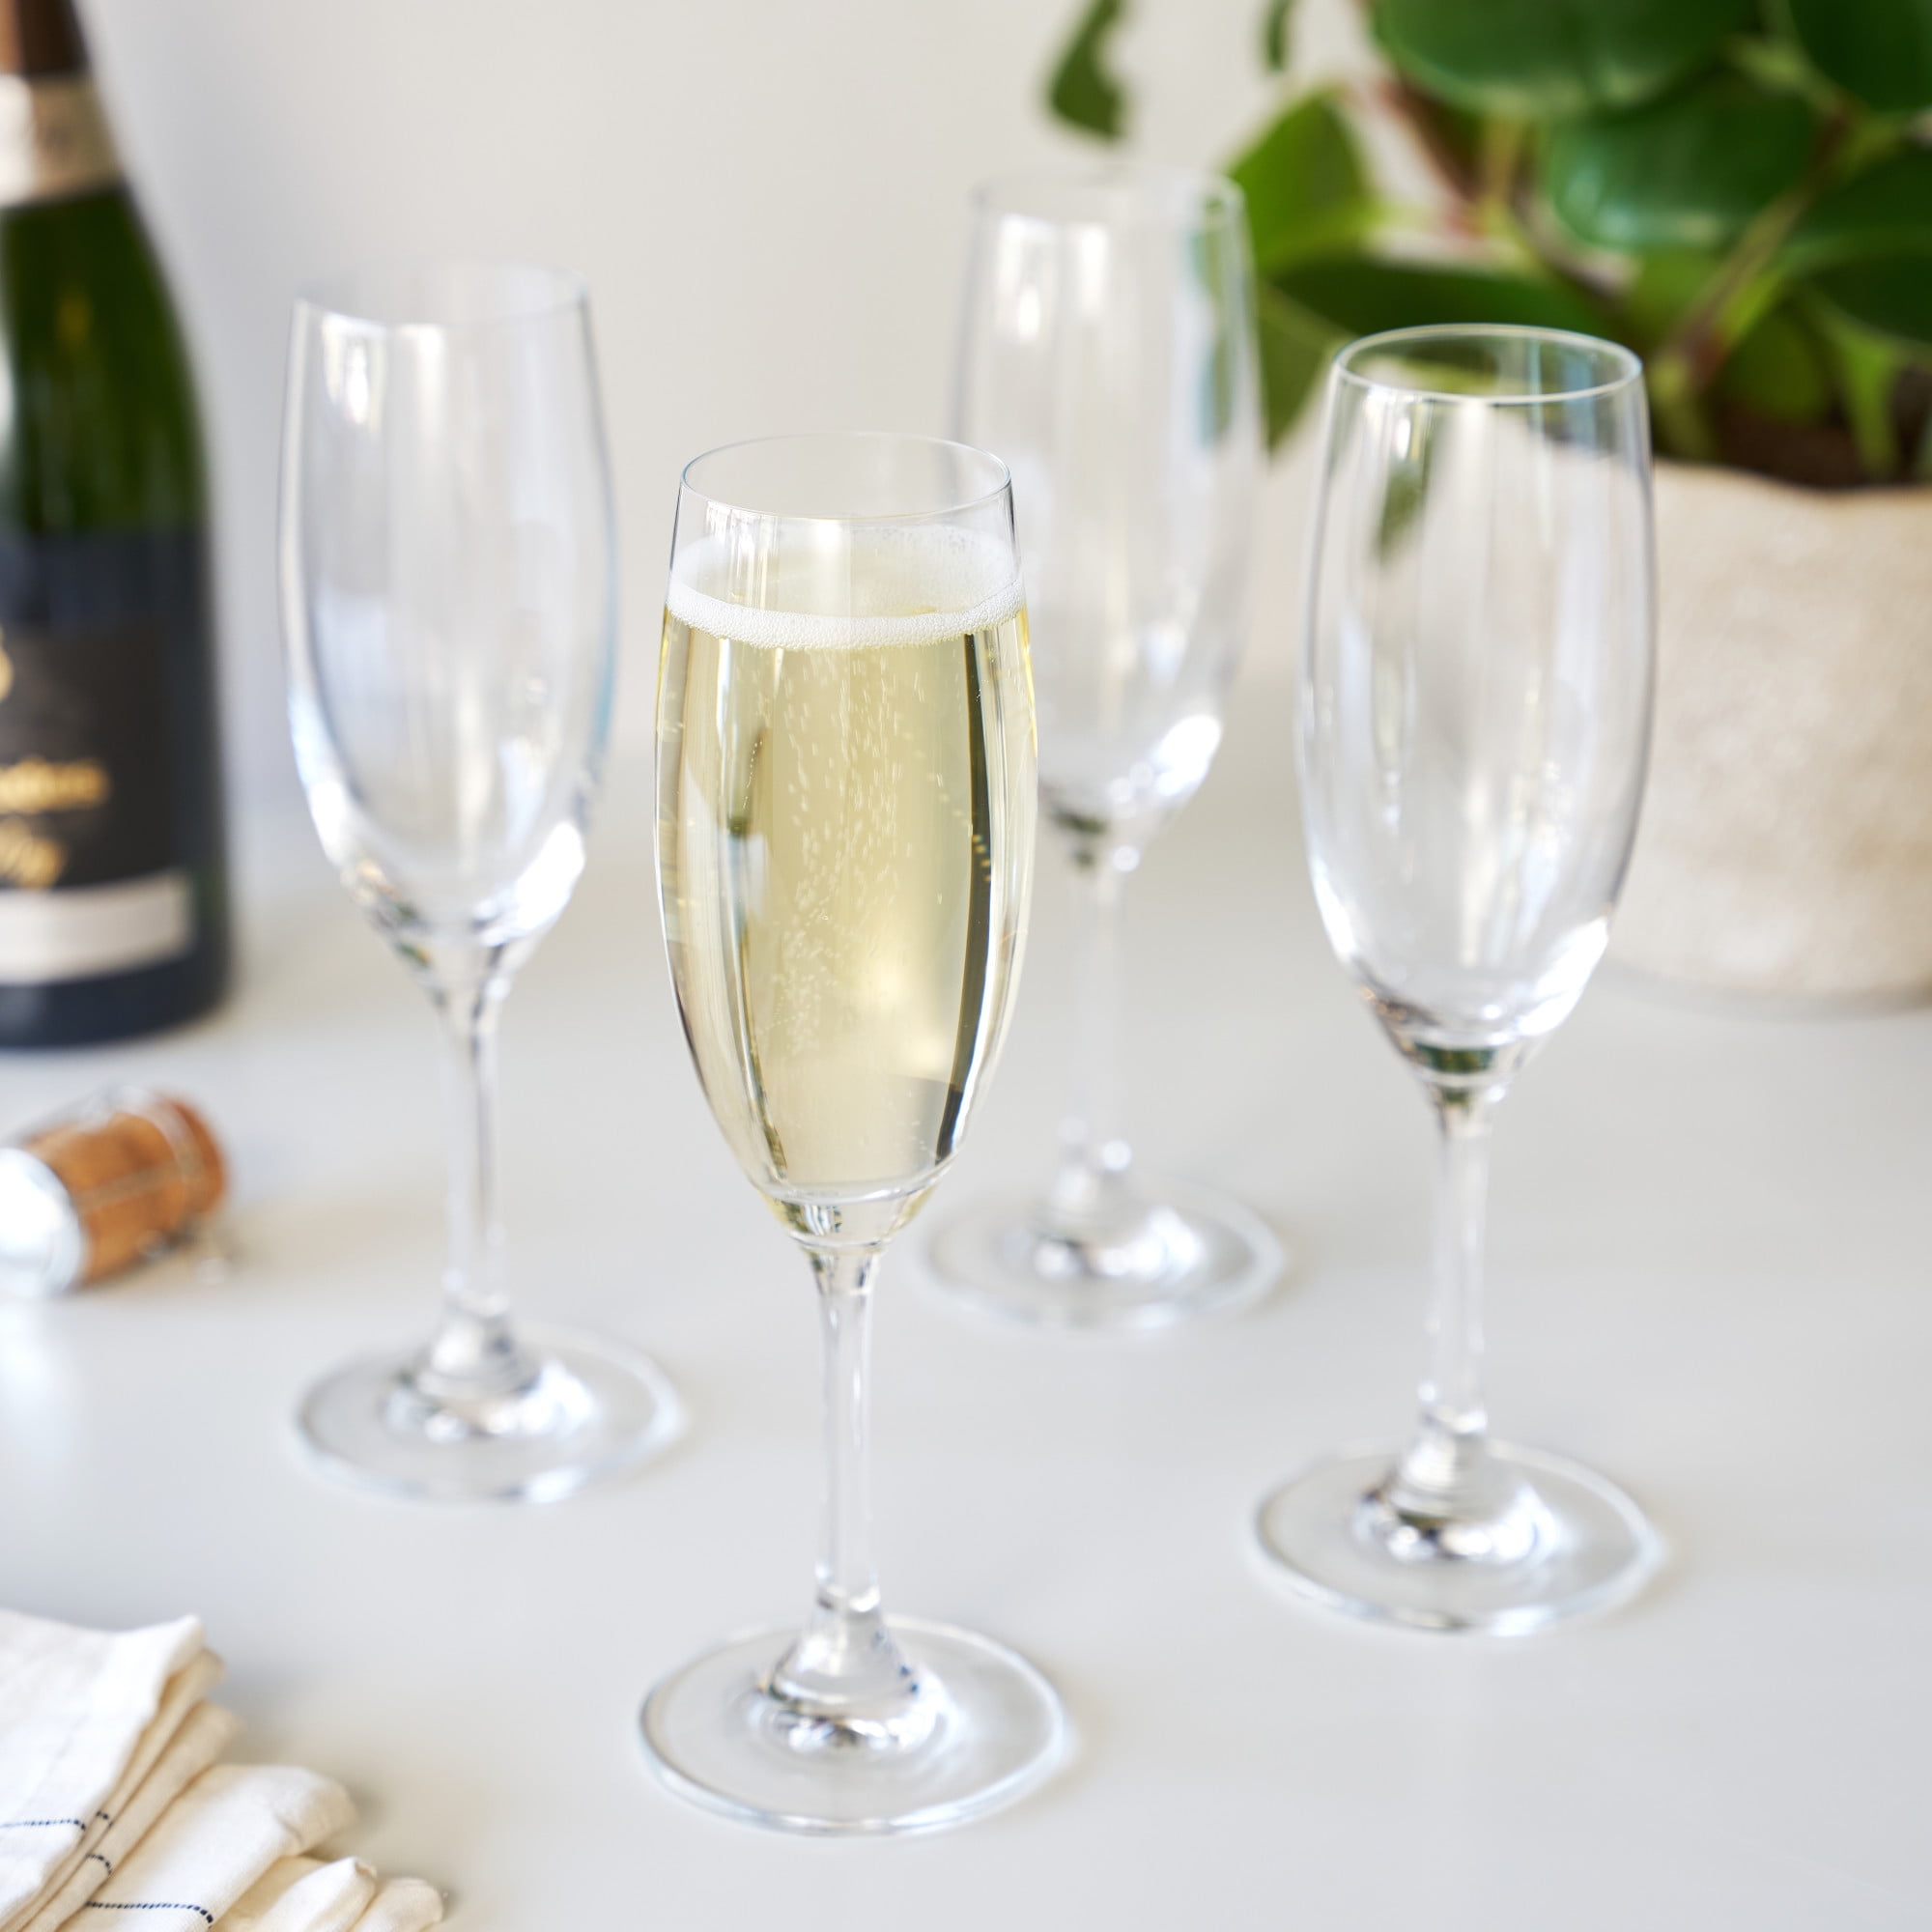 Hanjue Champagne Glasses Set of 4, Champagne Flutes, 7 Oz Lead-free Crystal  glass, Clear Glasses Set…See more Hanjue Champagne Glasses Set of 4